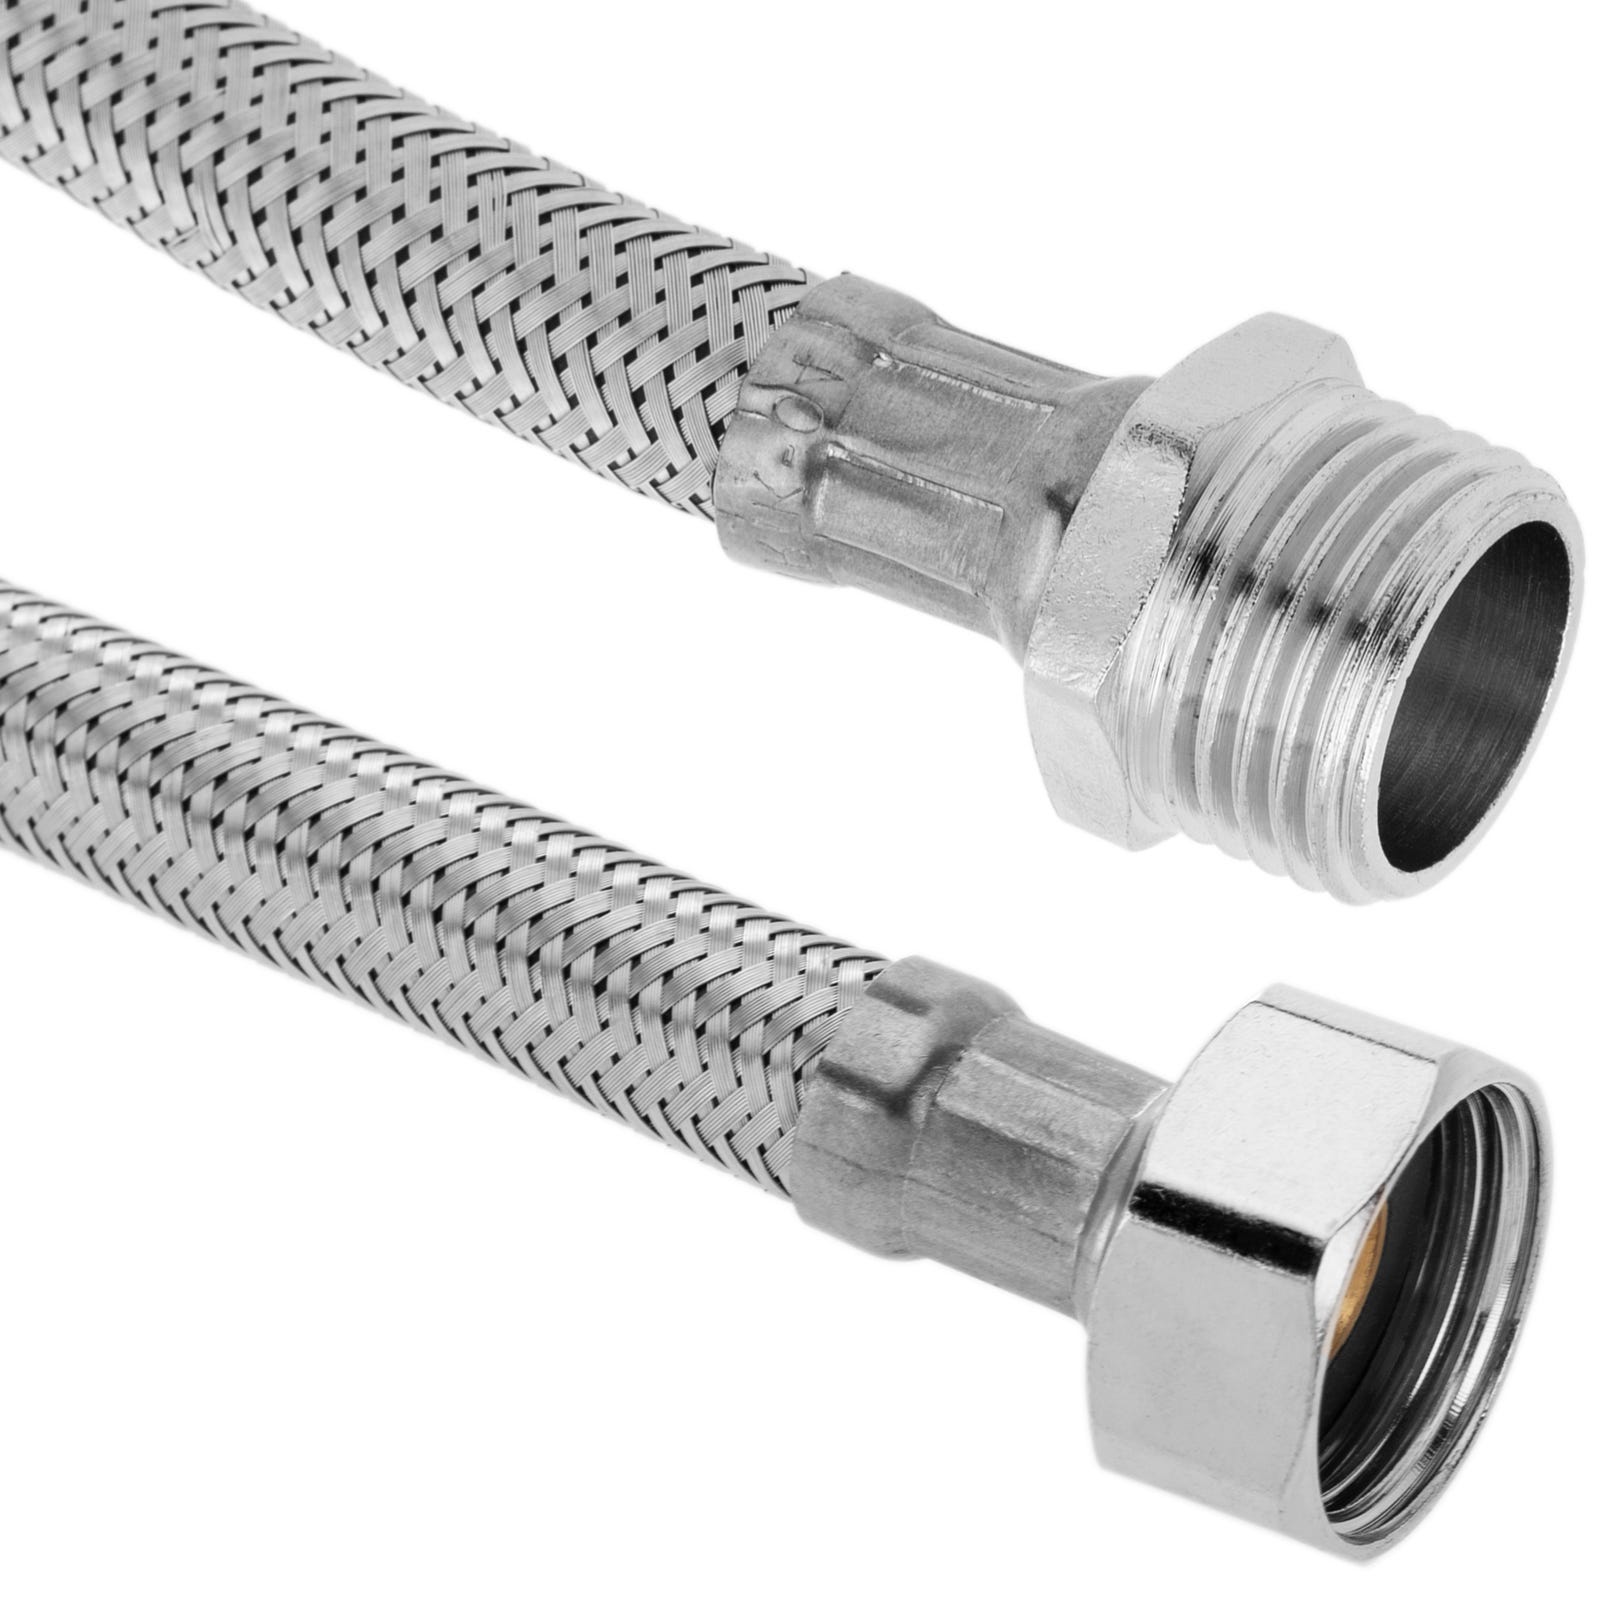 Les colliers du tuyau flexible, tube en acier inoxydable 304